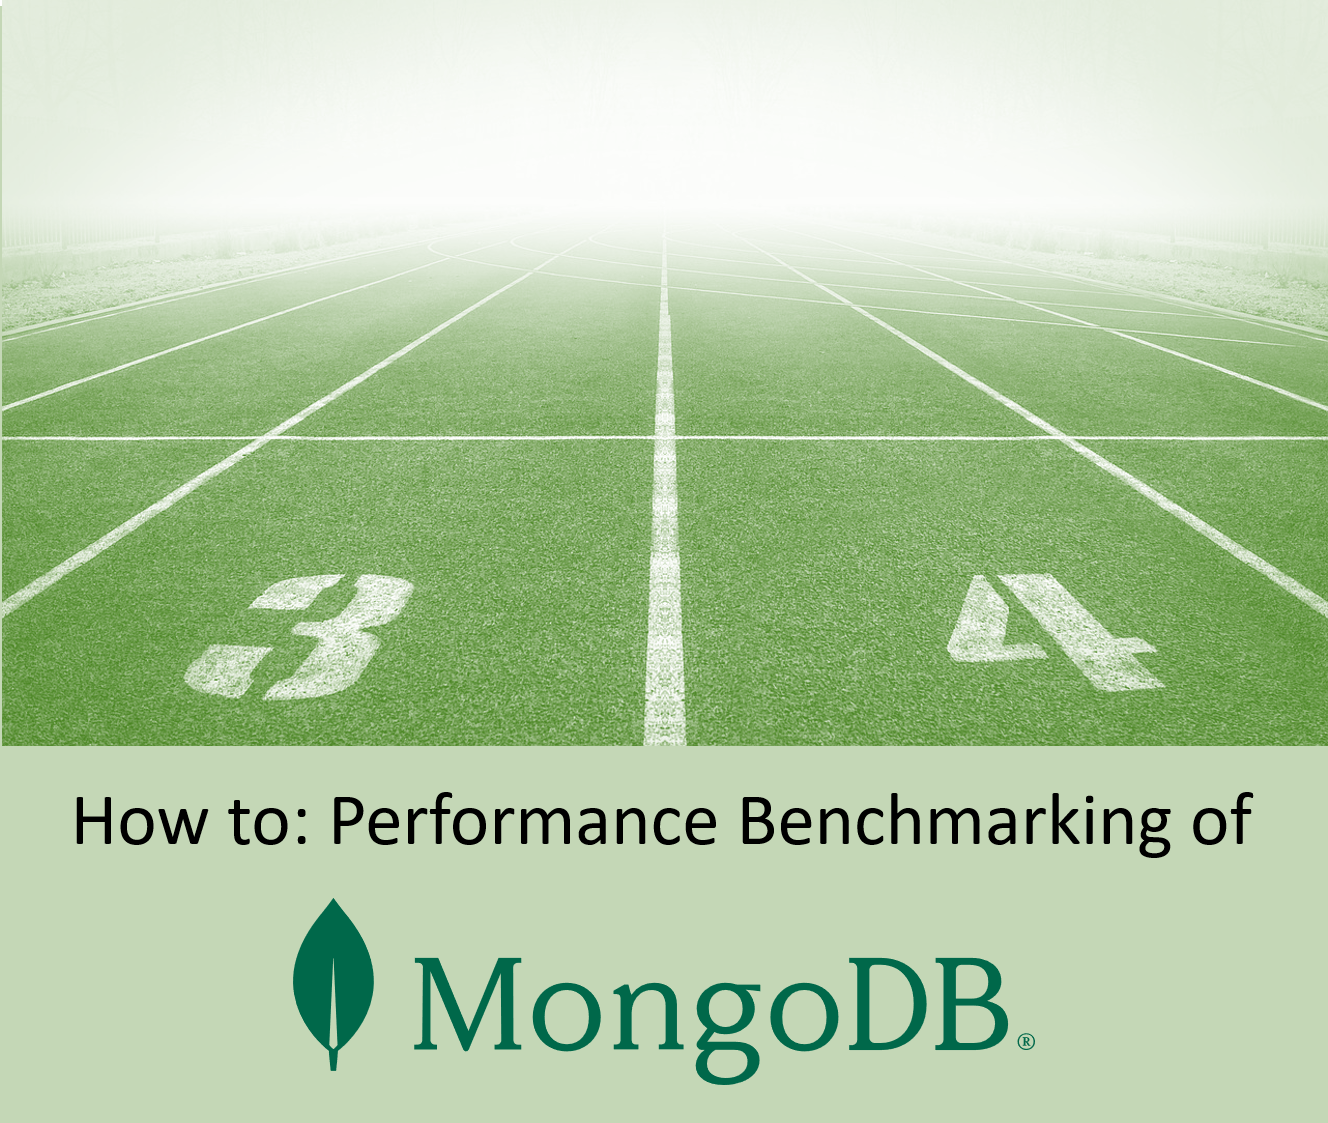 How-to: Performance Benchmark of MongoDB